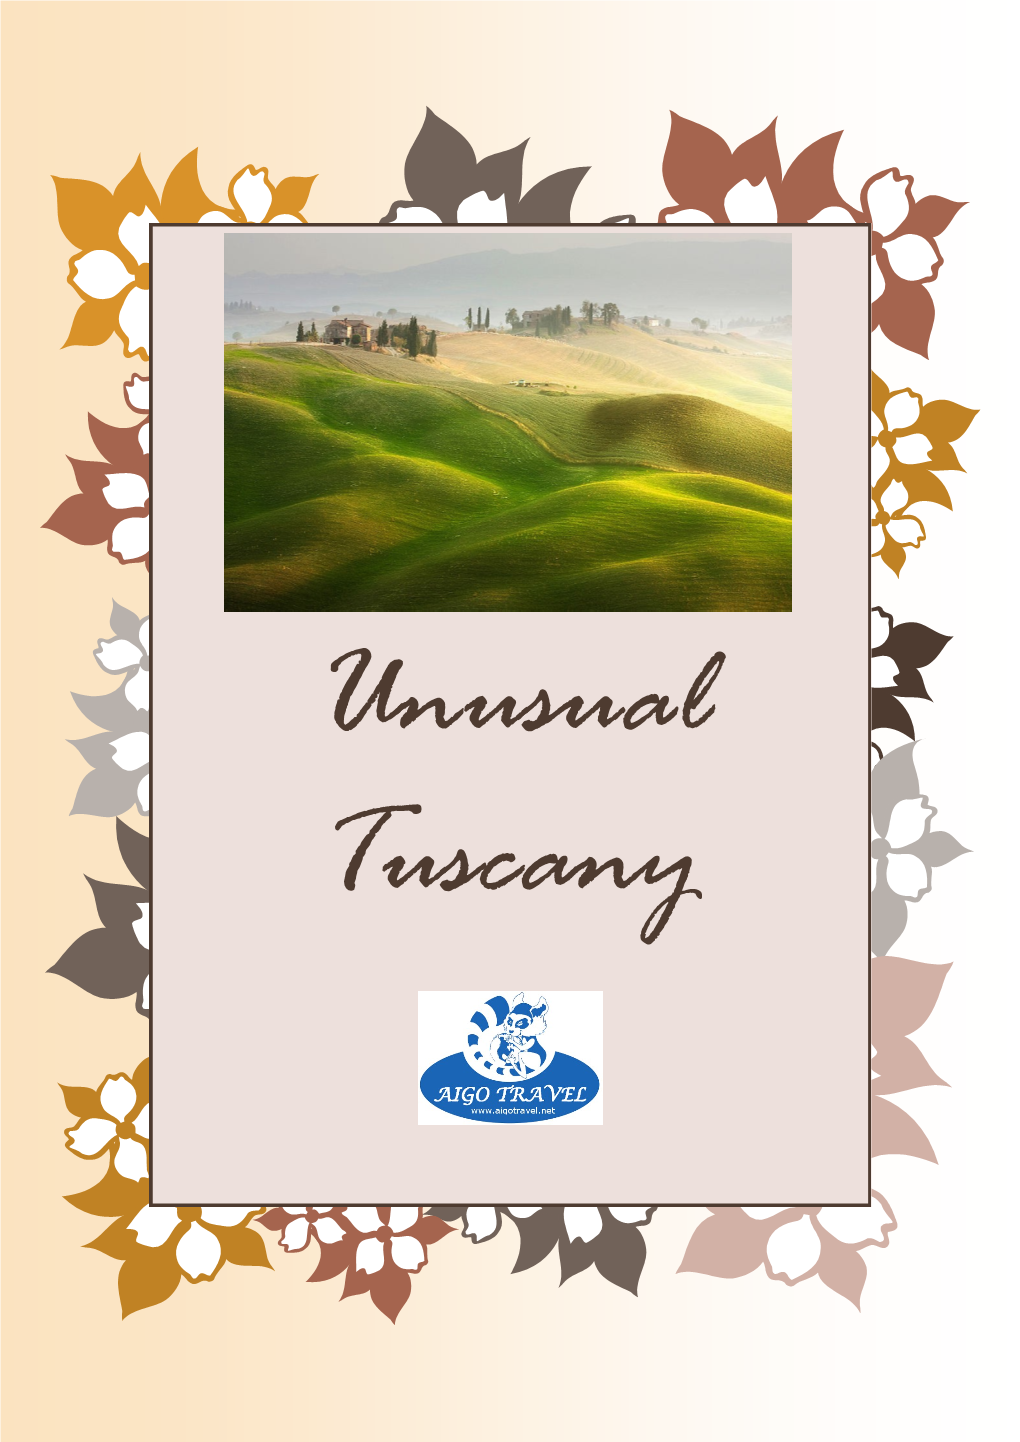 Unusual Tuscany 2018